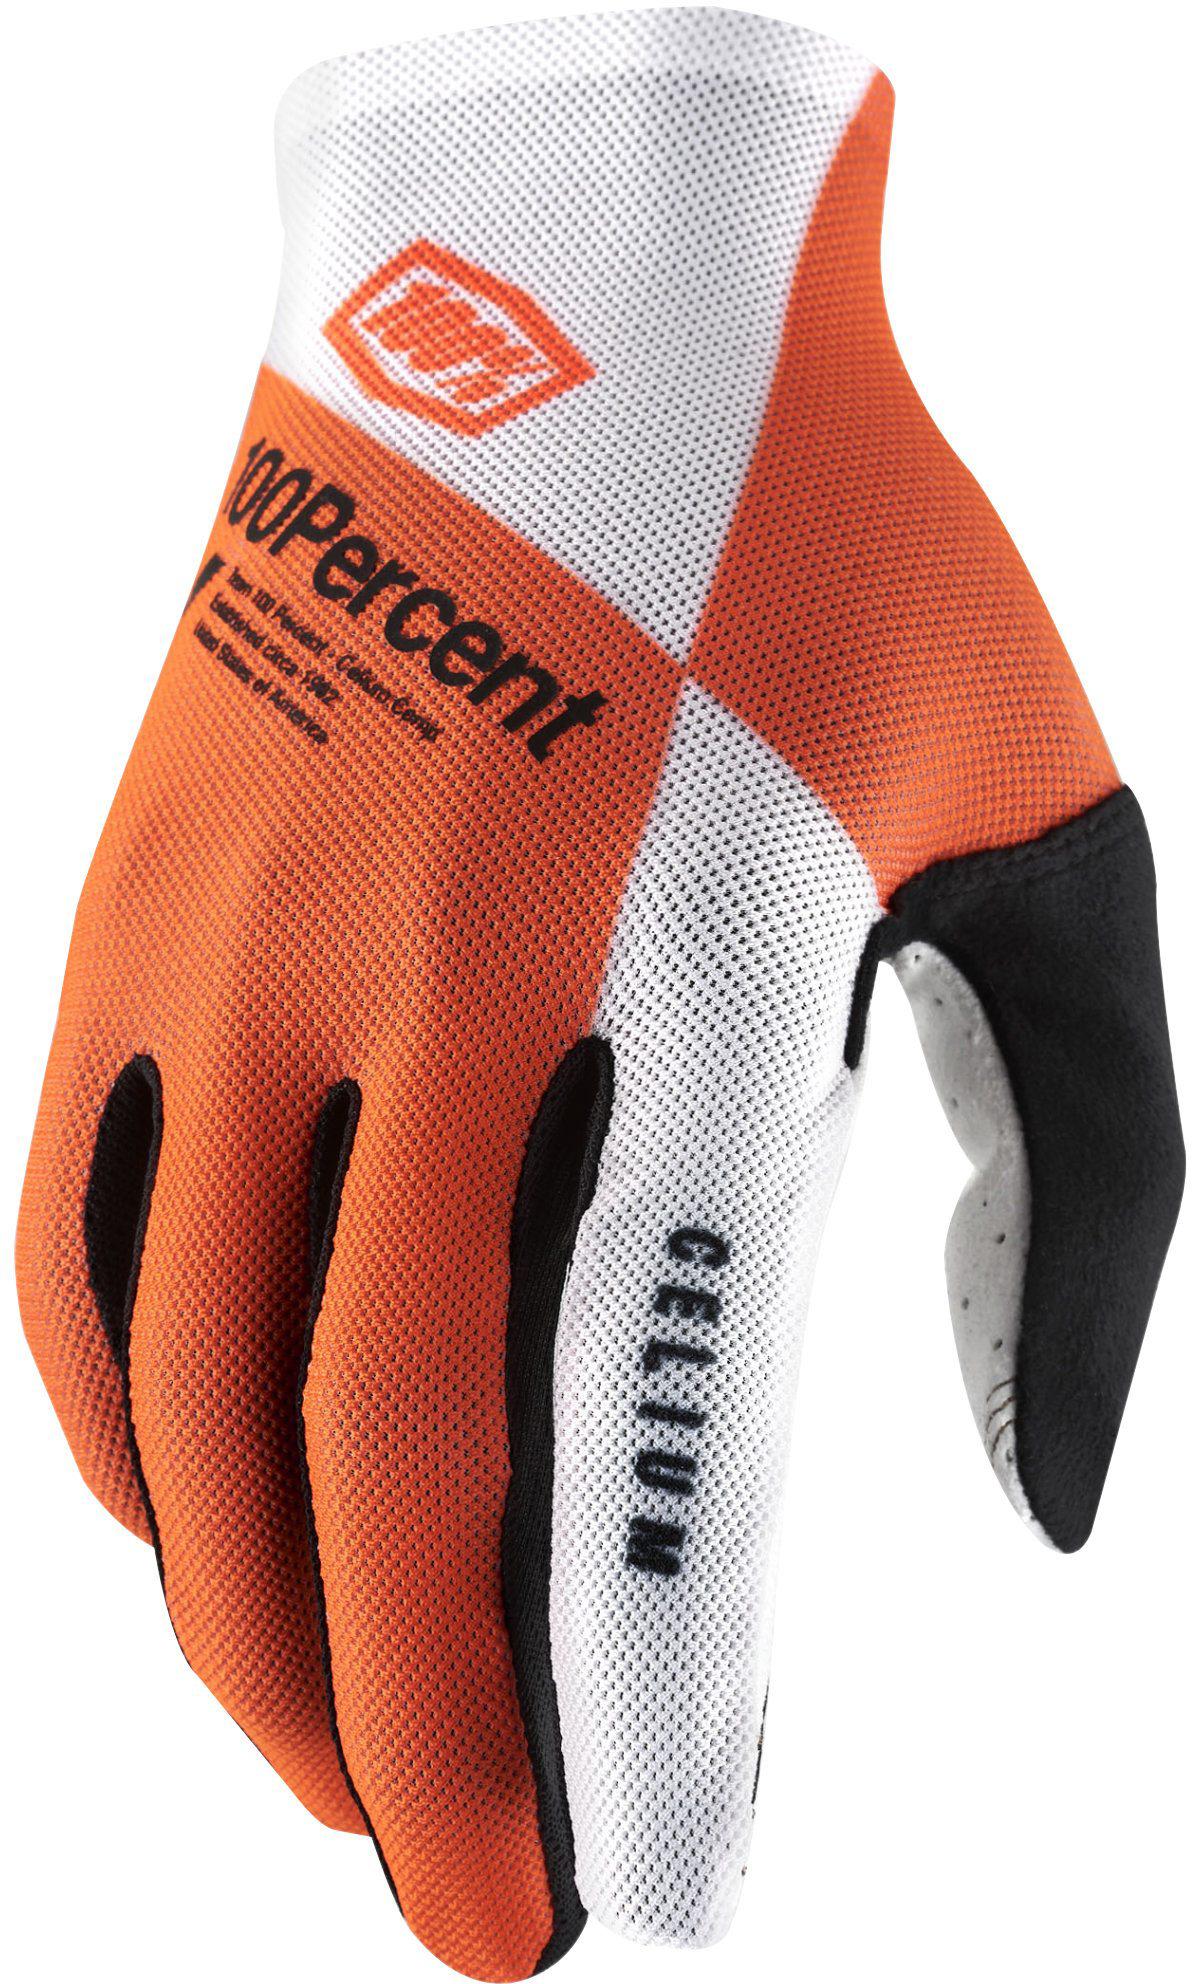 100% Celium Glove - Fluorescent Orange/white